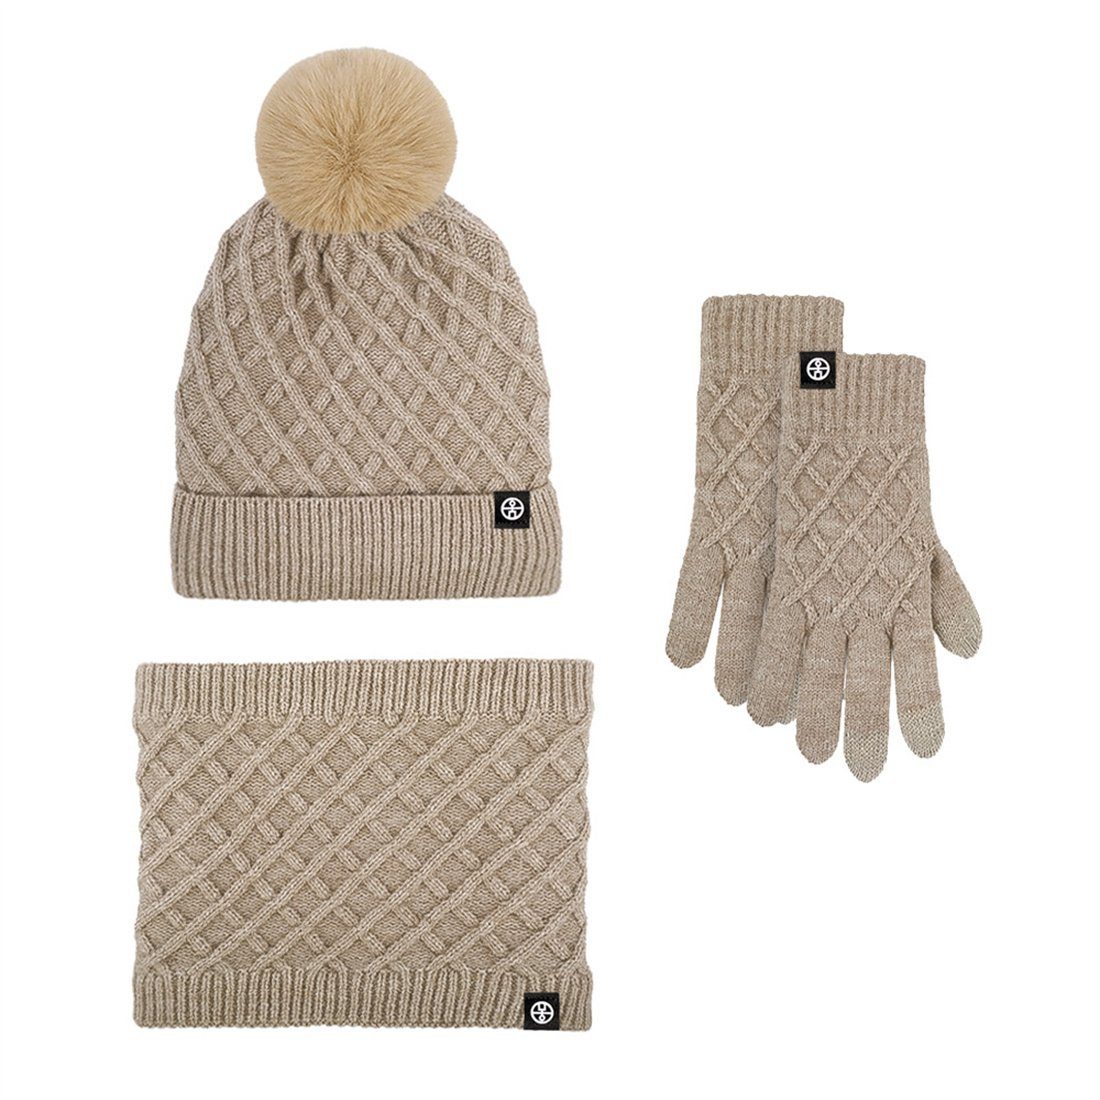 DÖRÖY Strickmütze Winter gepolstert Warm Mütze Schal Handschuhe 3 Stück, Warm Set khaki | Strickmützen